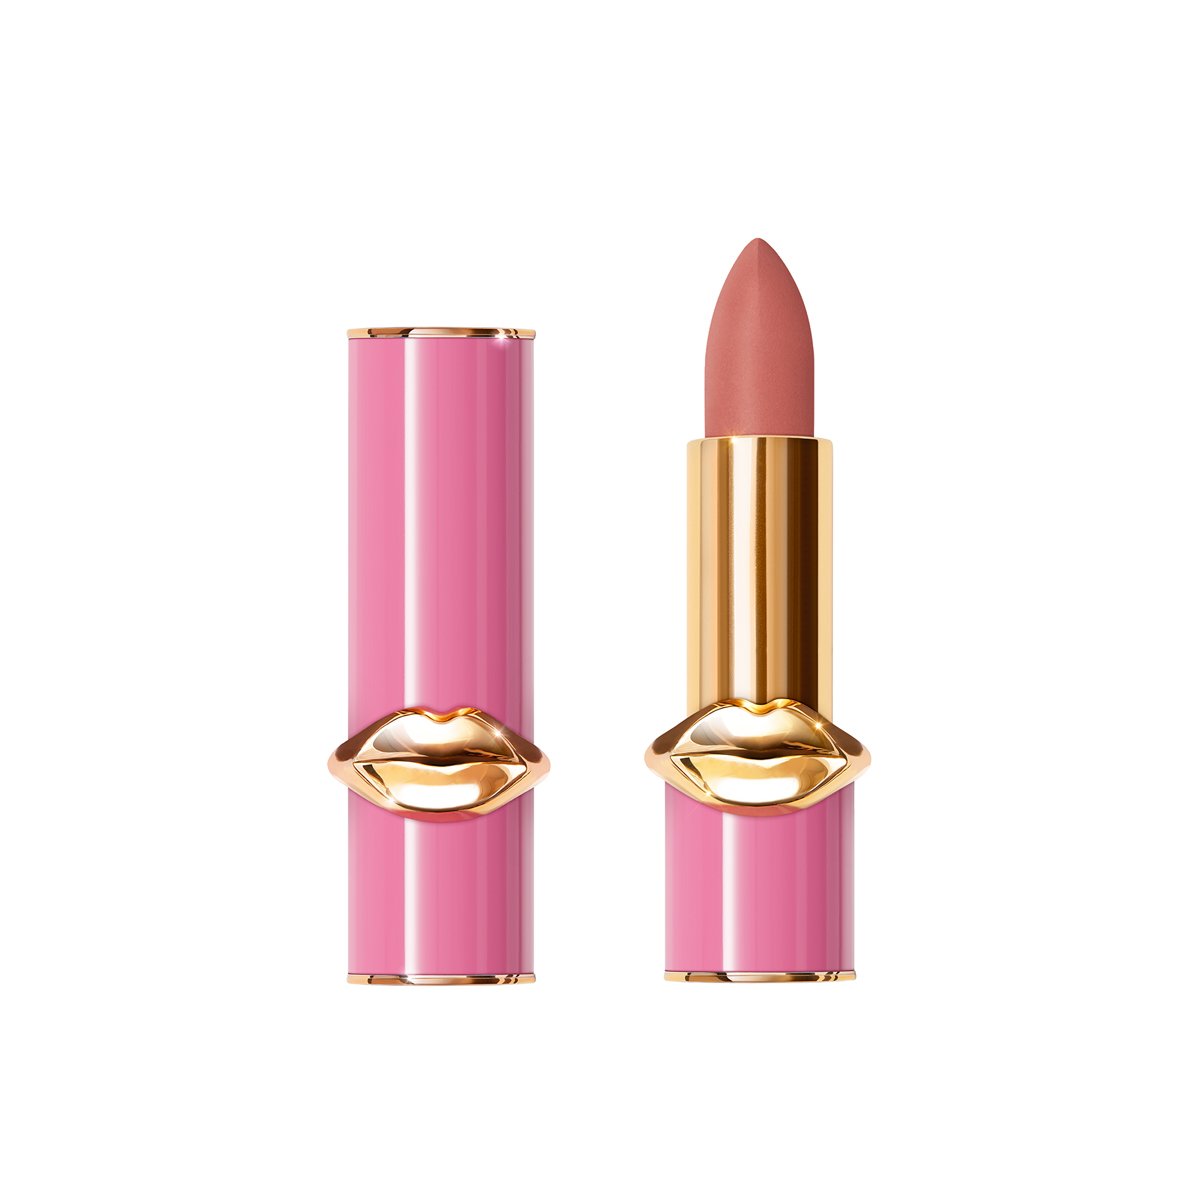 Pat McGrath Opulence Pink Sapphire MatteTrance Lipstick - Christy (Divine Beige Peach)